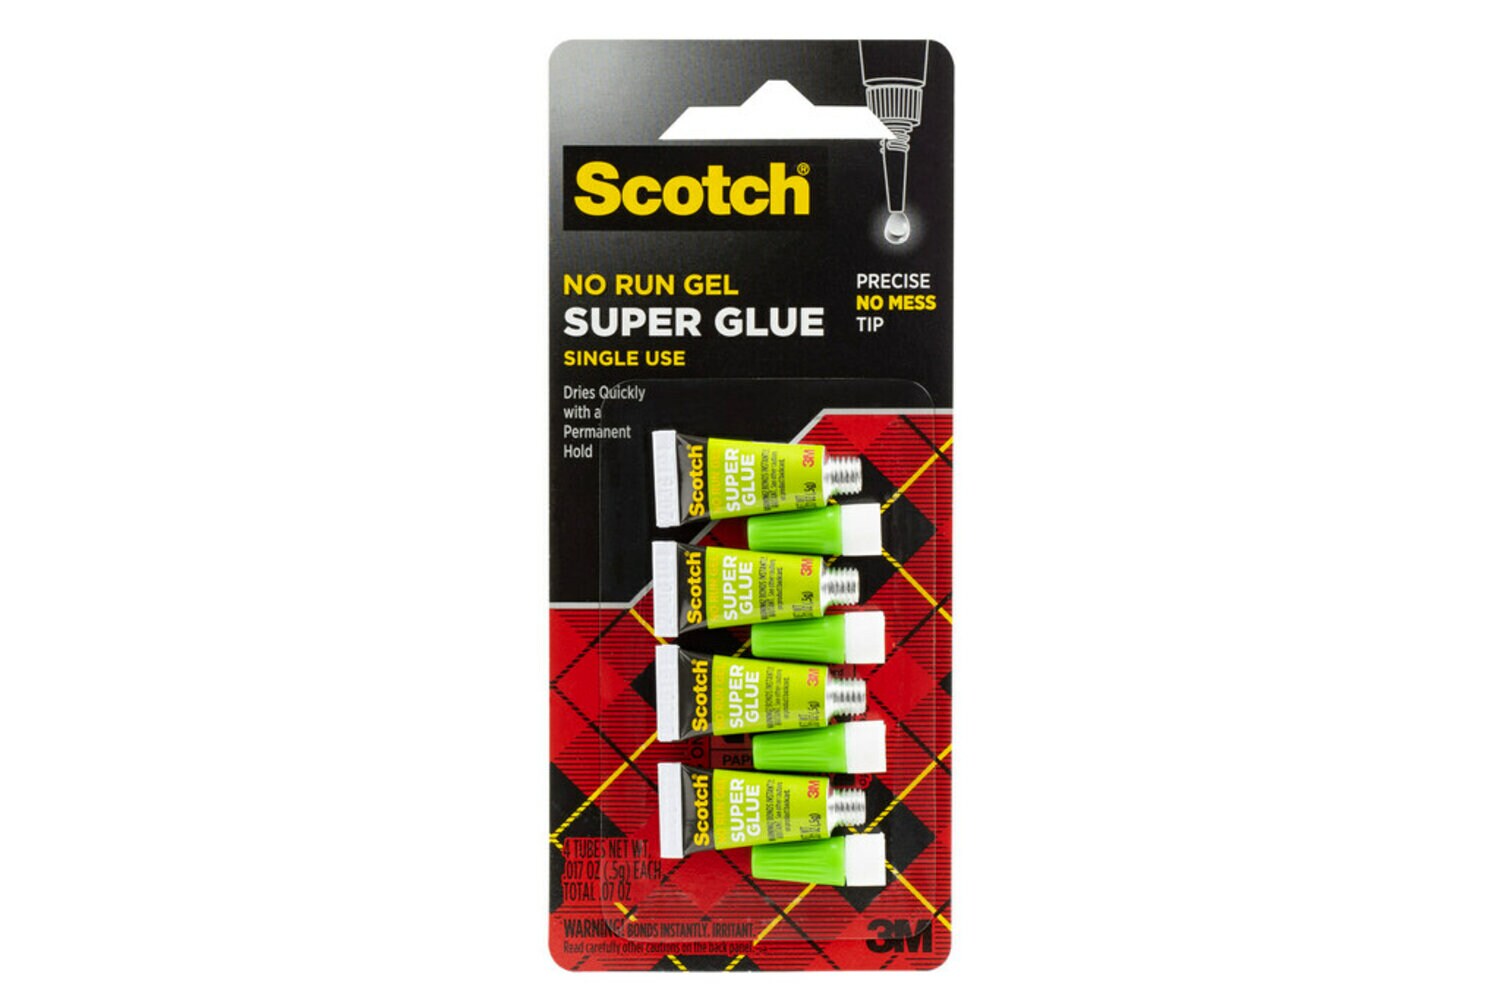 7000047661 - Scotch Super Glue Gel AD119, 4-Pack of single-use tubes, .017 oz each